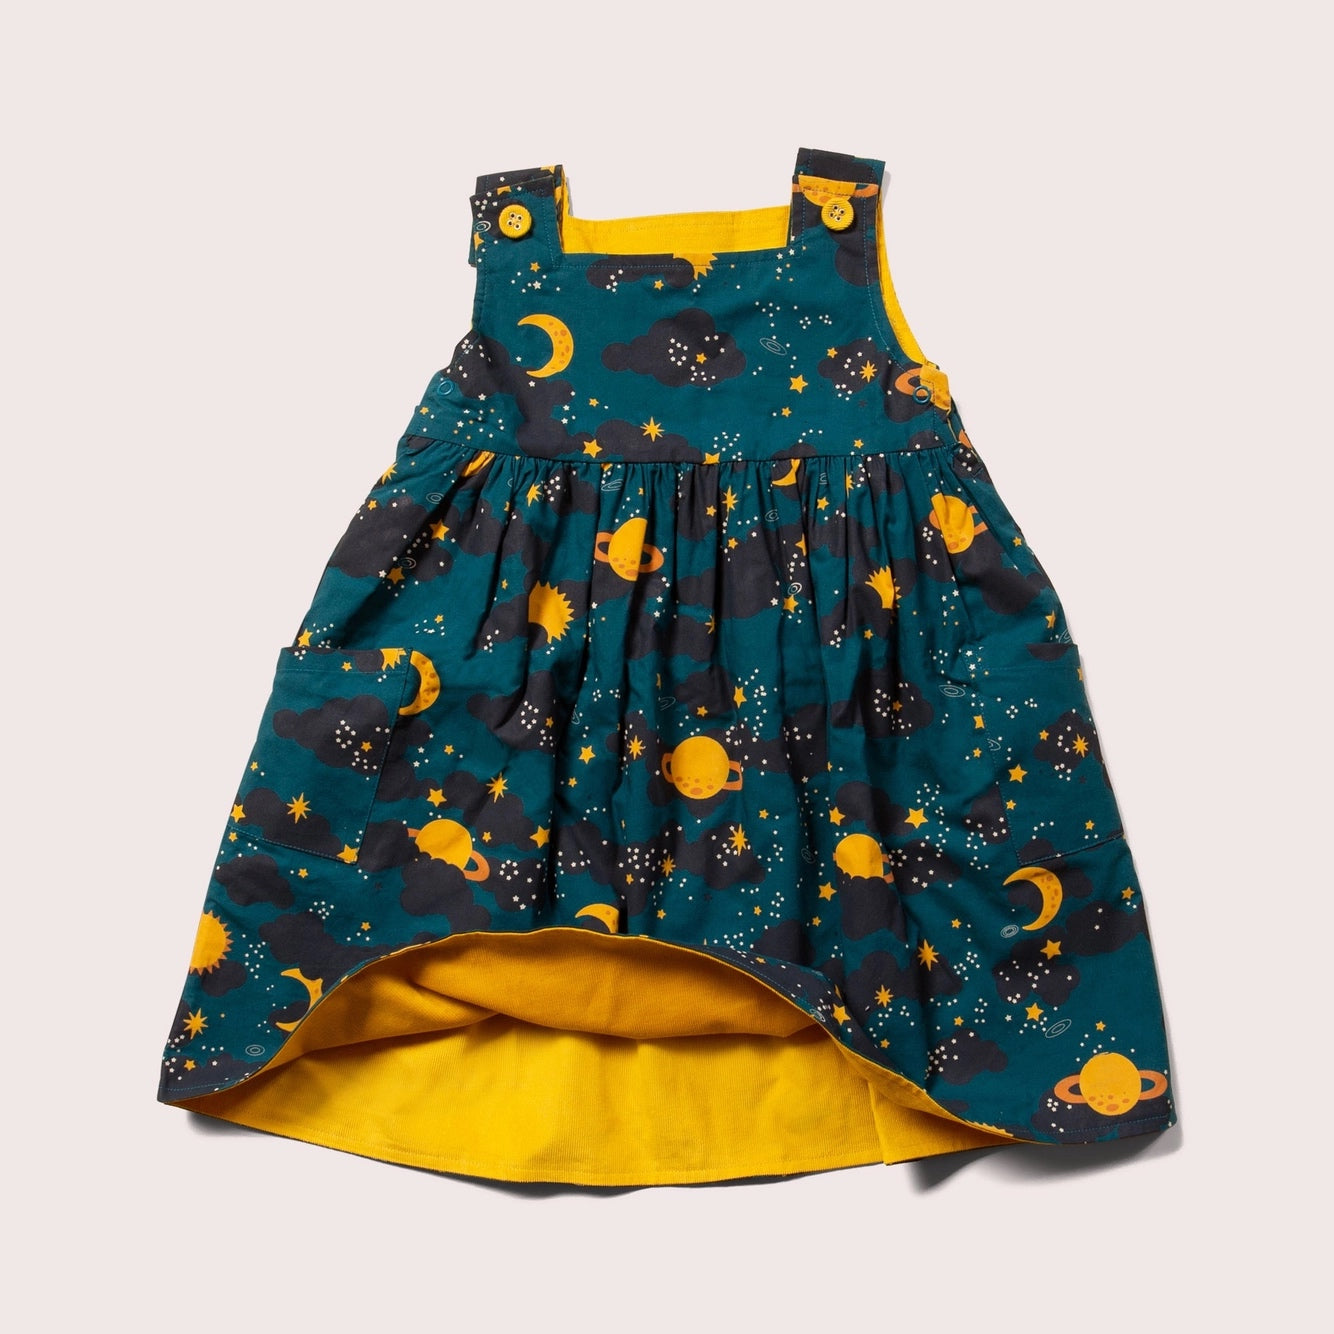 Saturn nights reversible penny dress